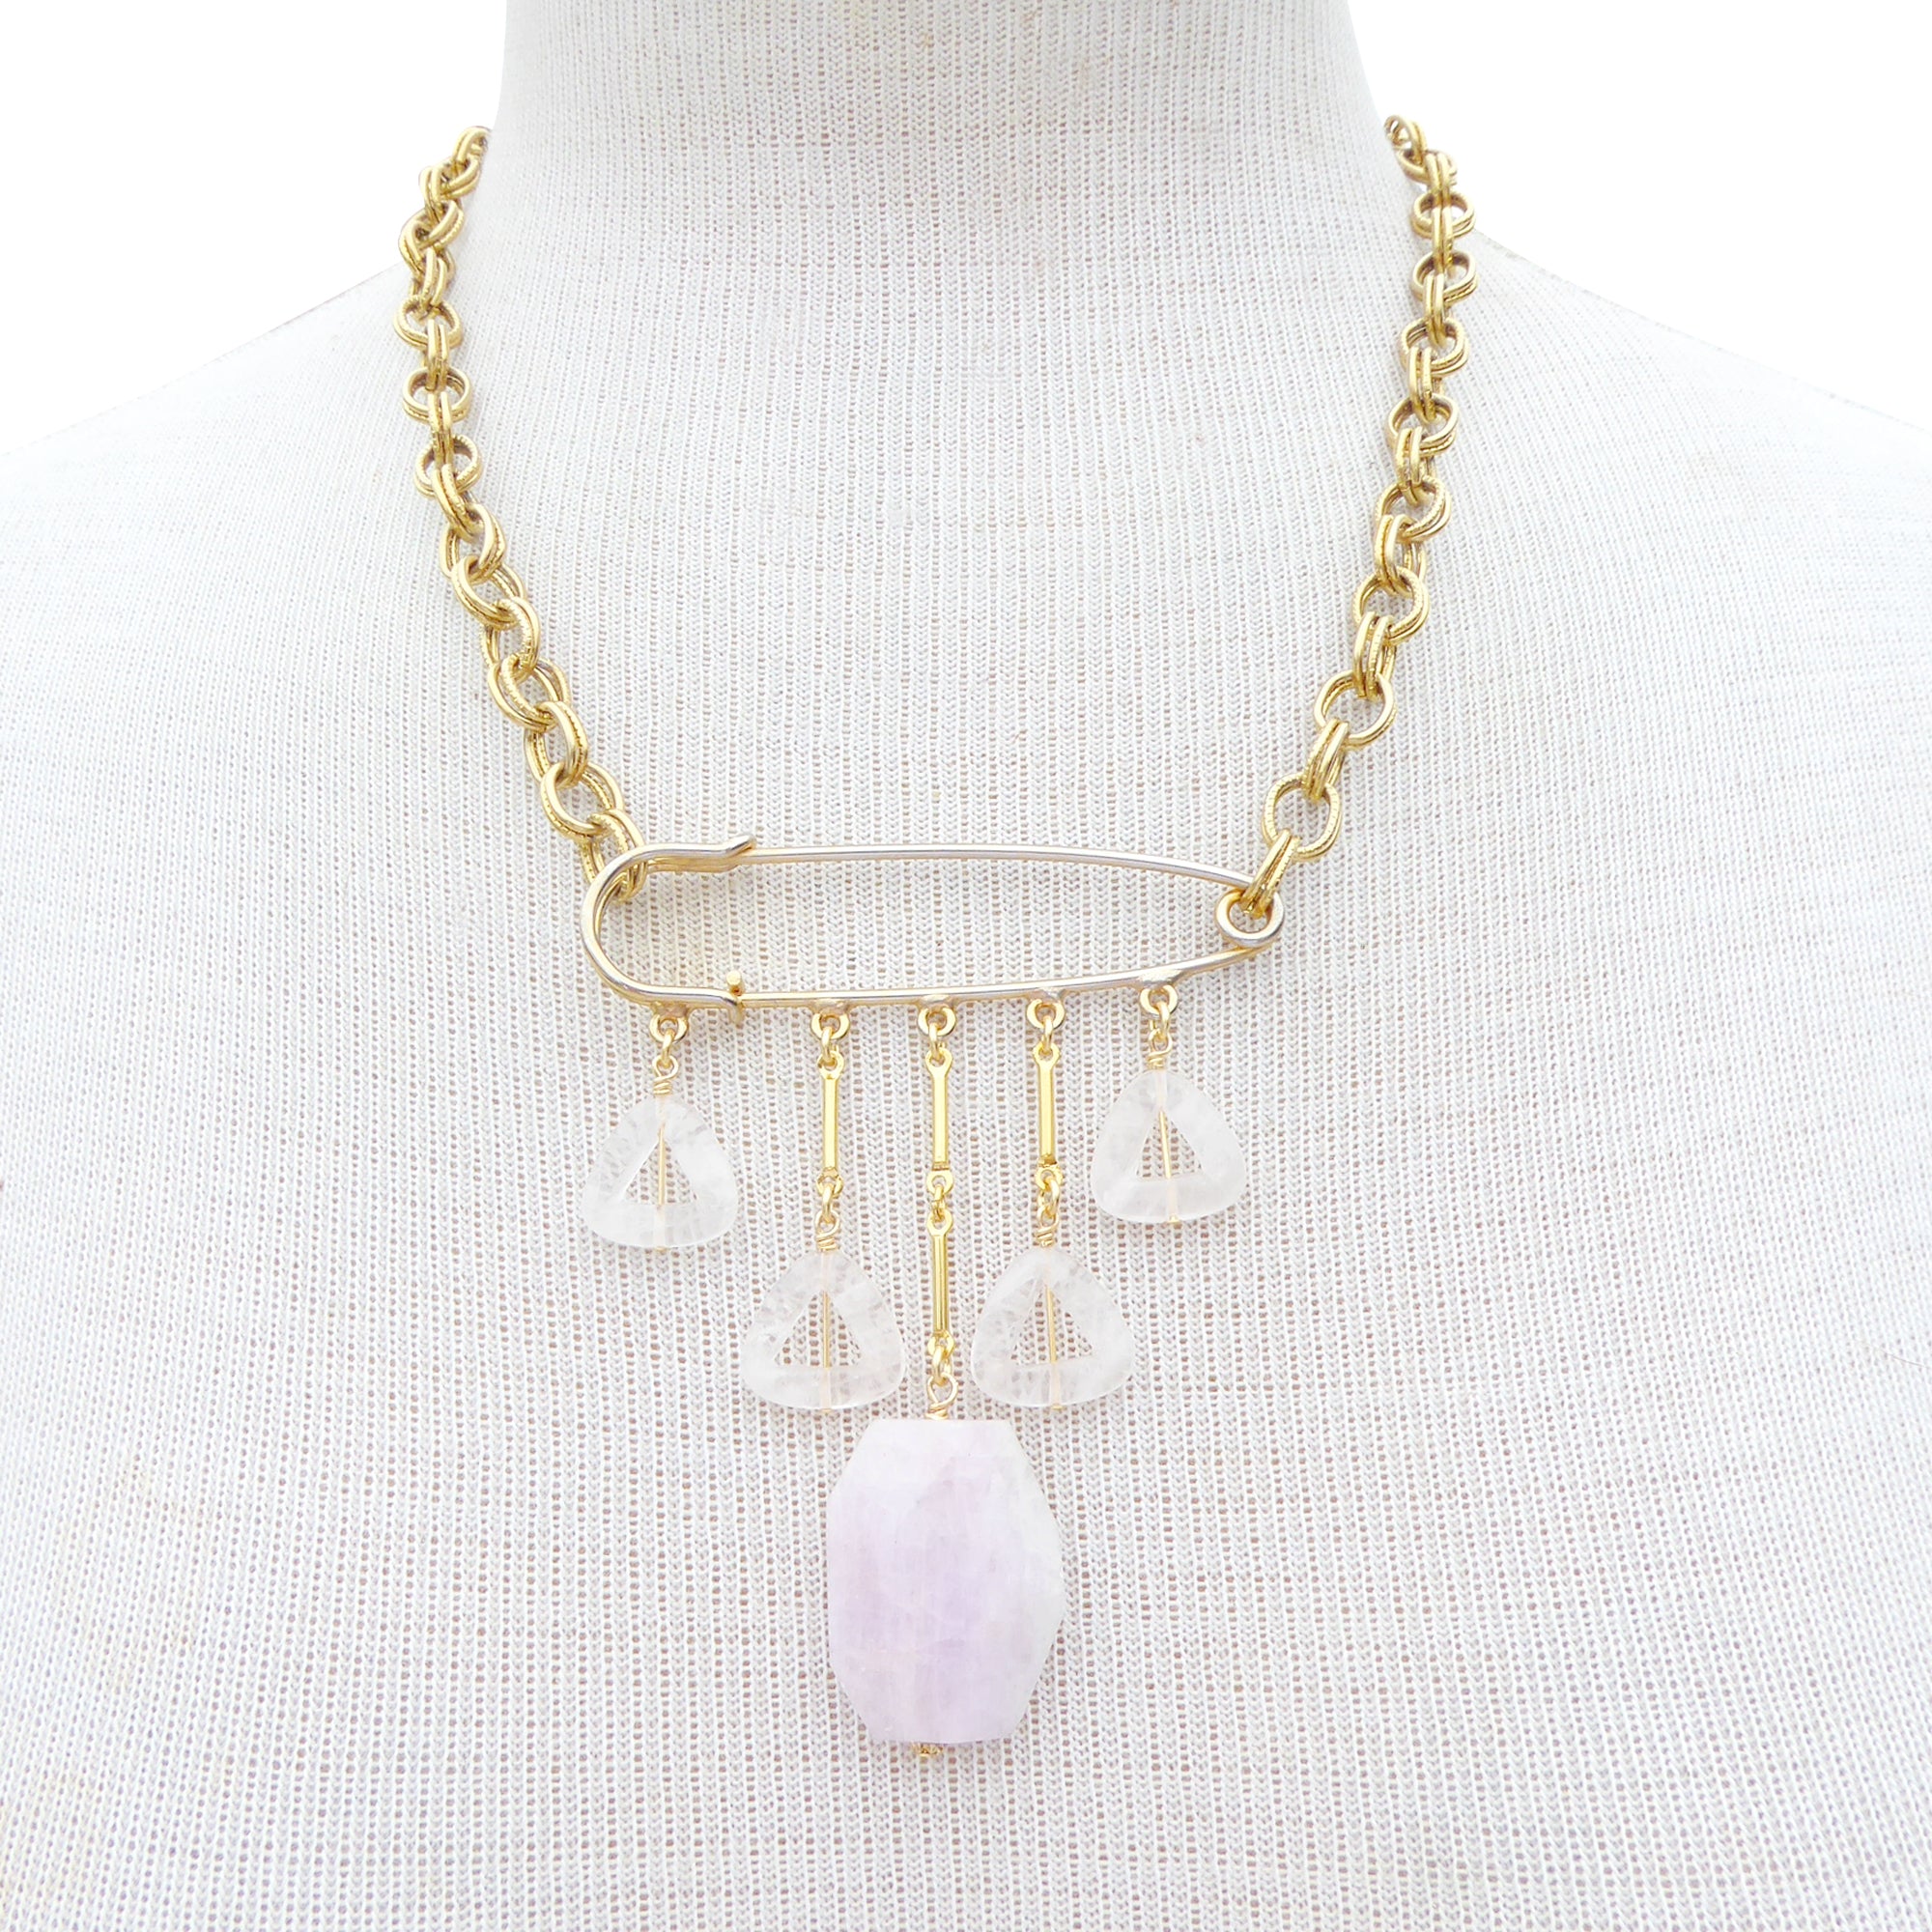 Kunzite and rose quartz safety pin necklace by Jenny Dayco 7